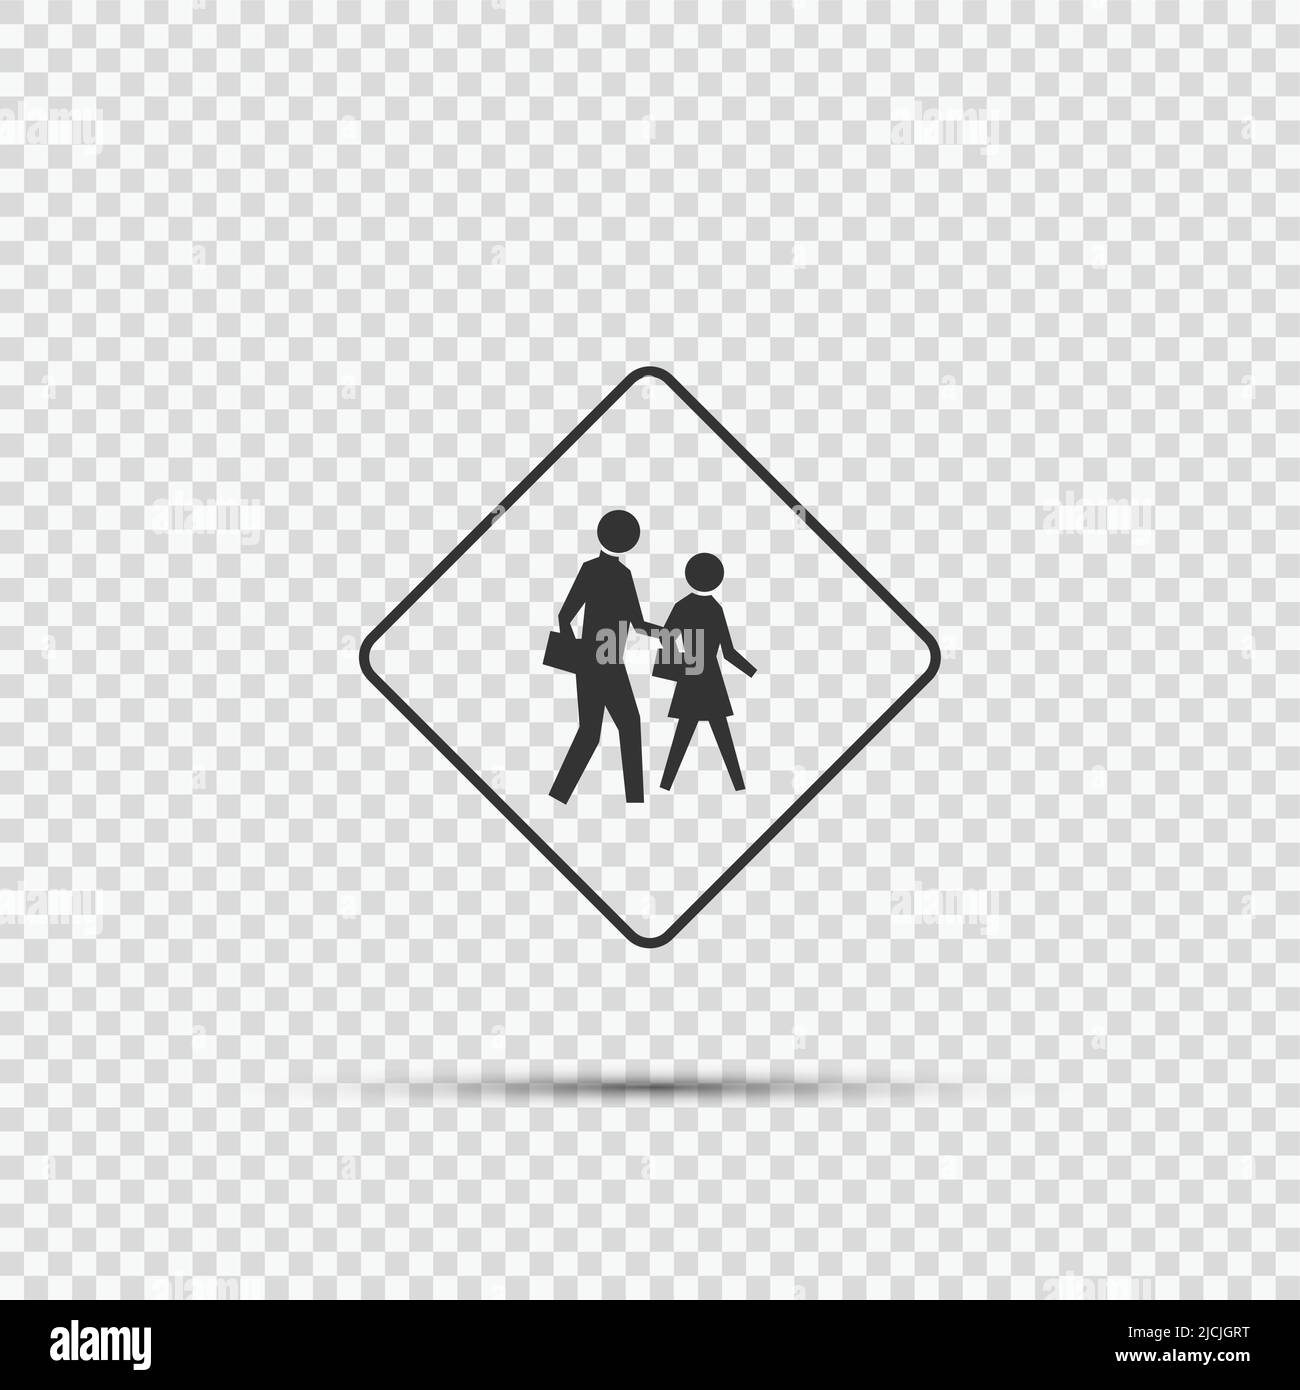 school crossing sign on transparent background,vector illustration Stock Vector